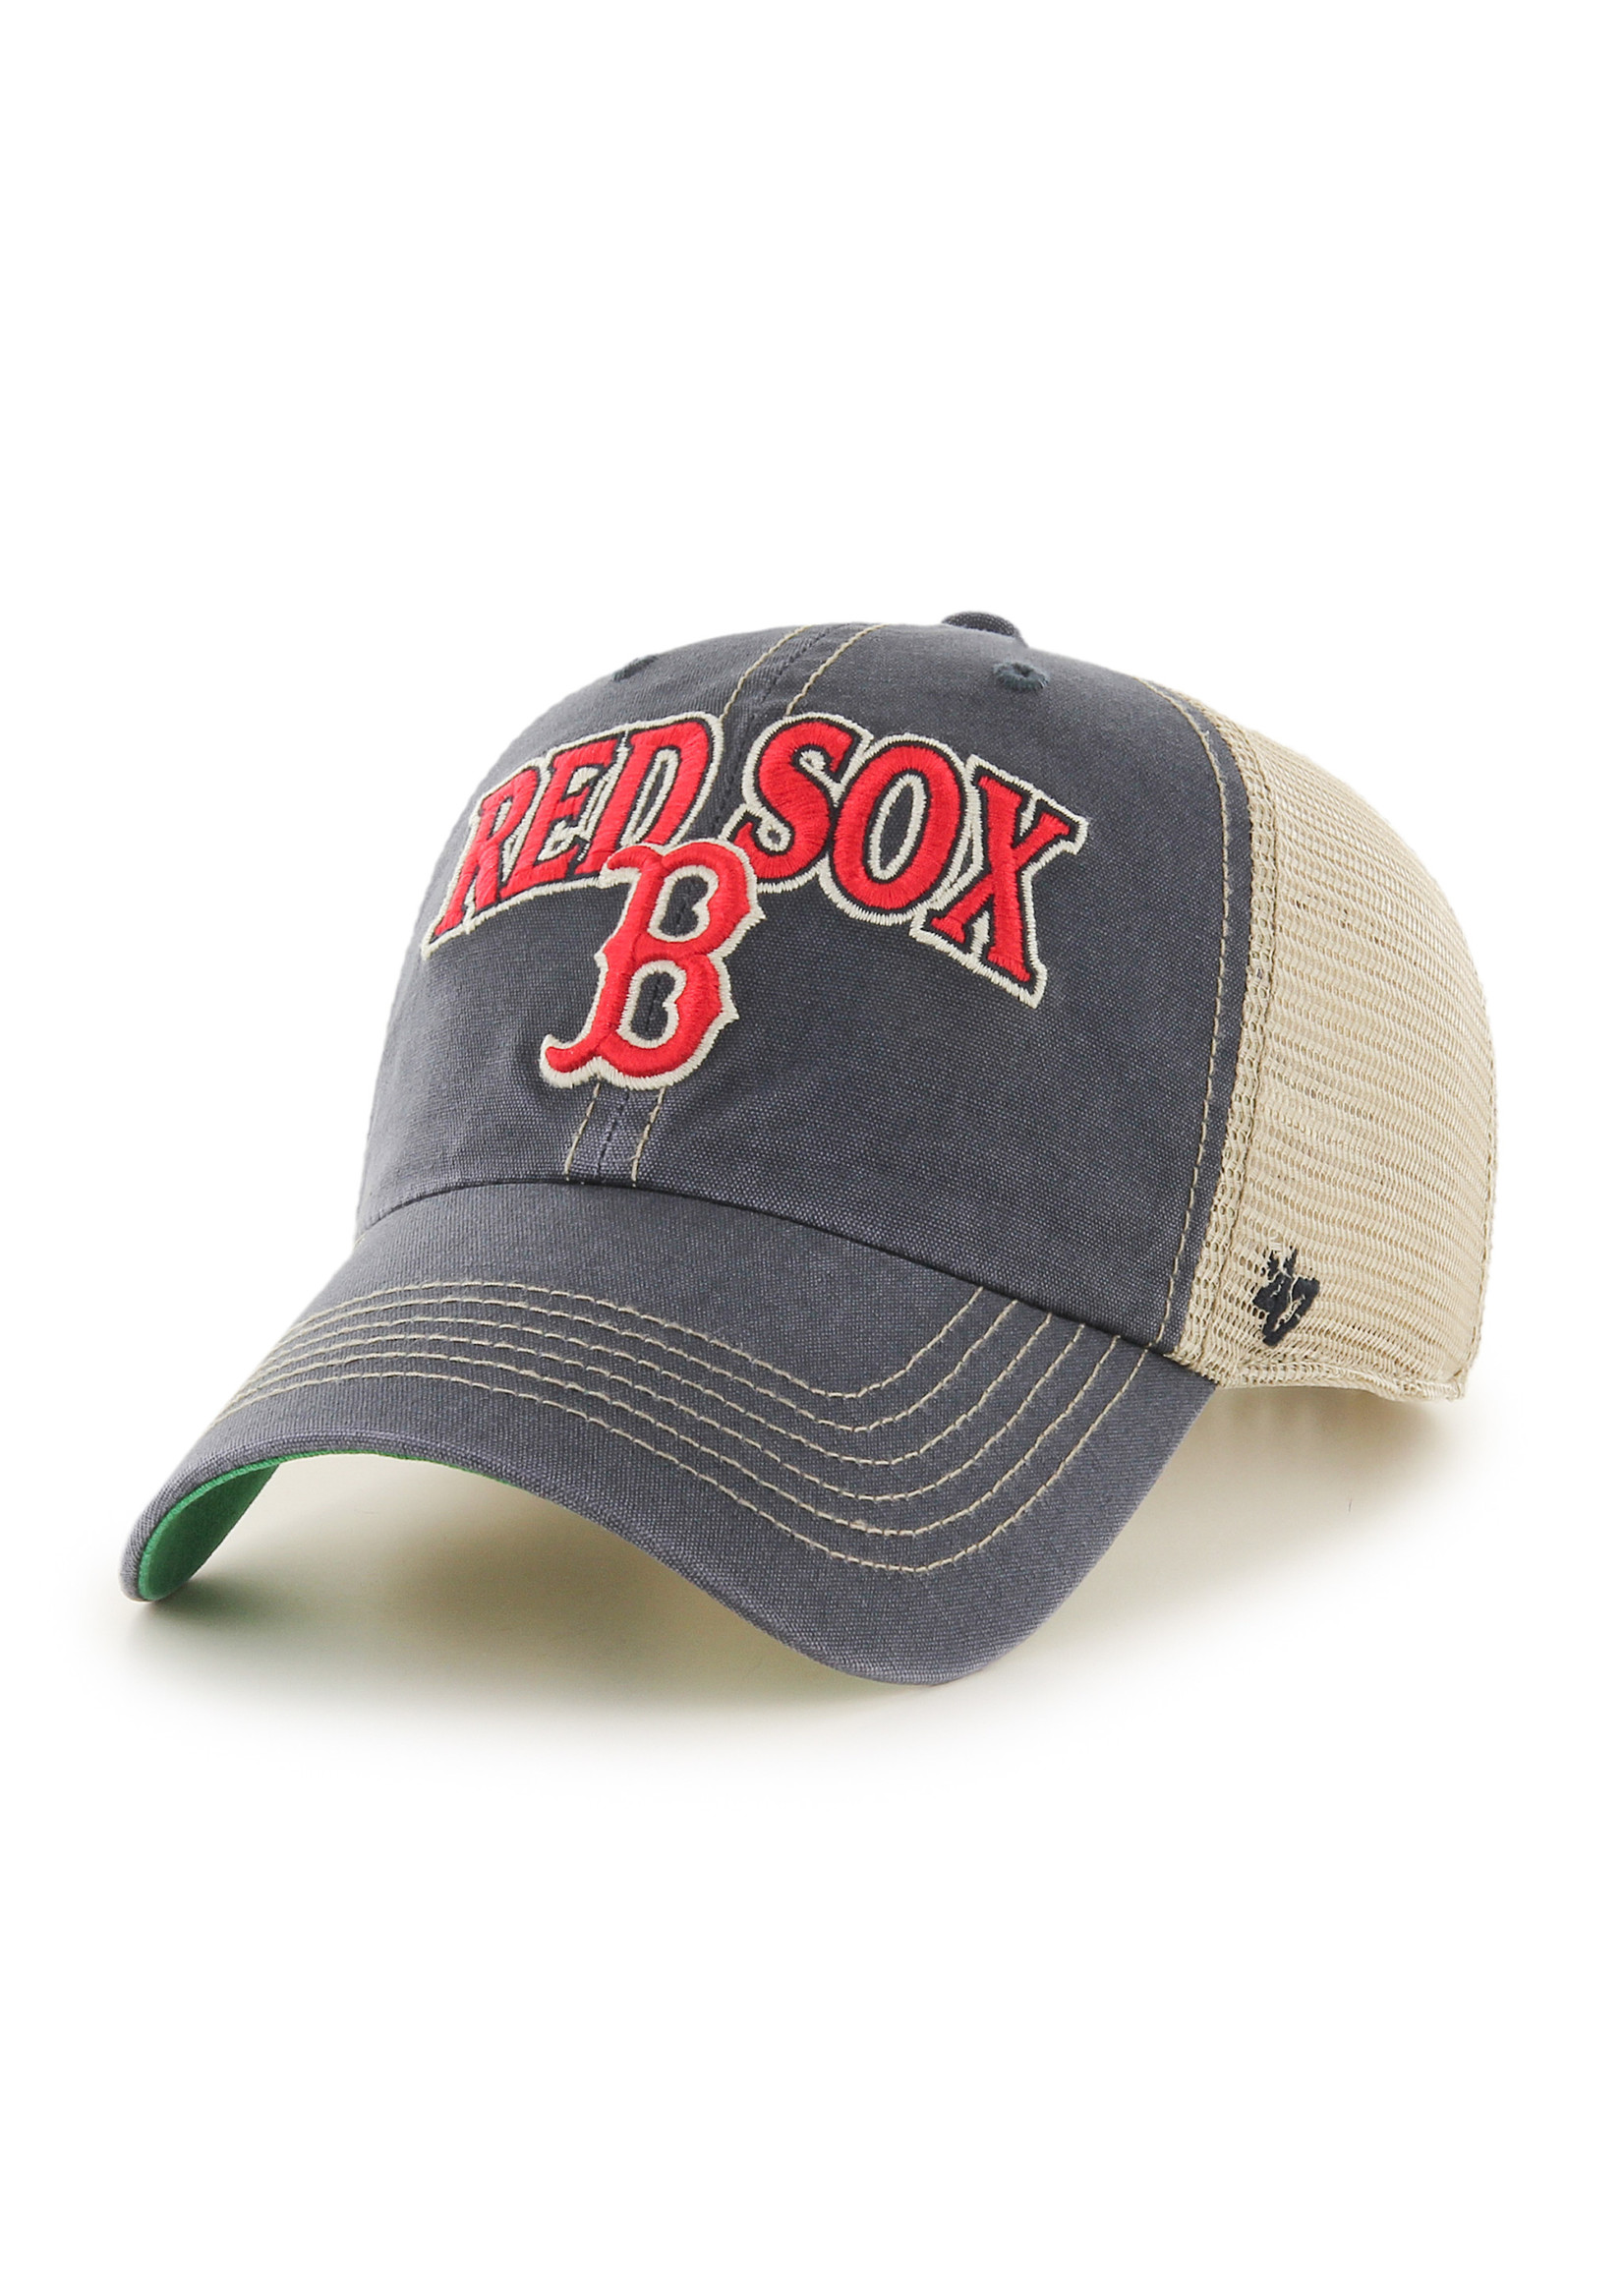 '47 Brand Red Sox B Blue/Cream Trucker Hat